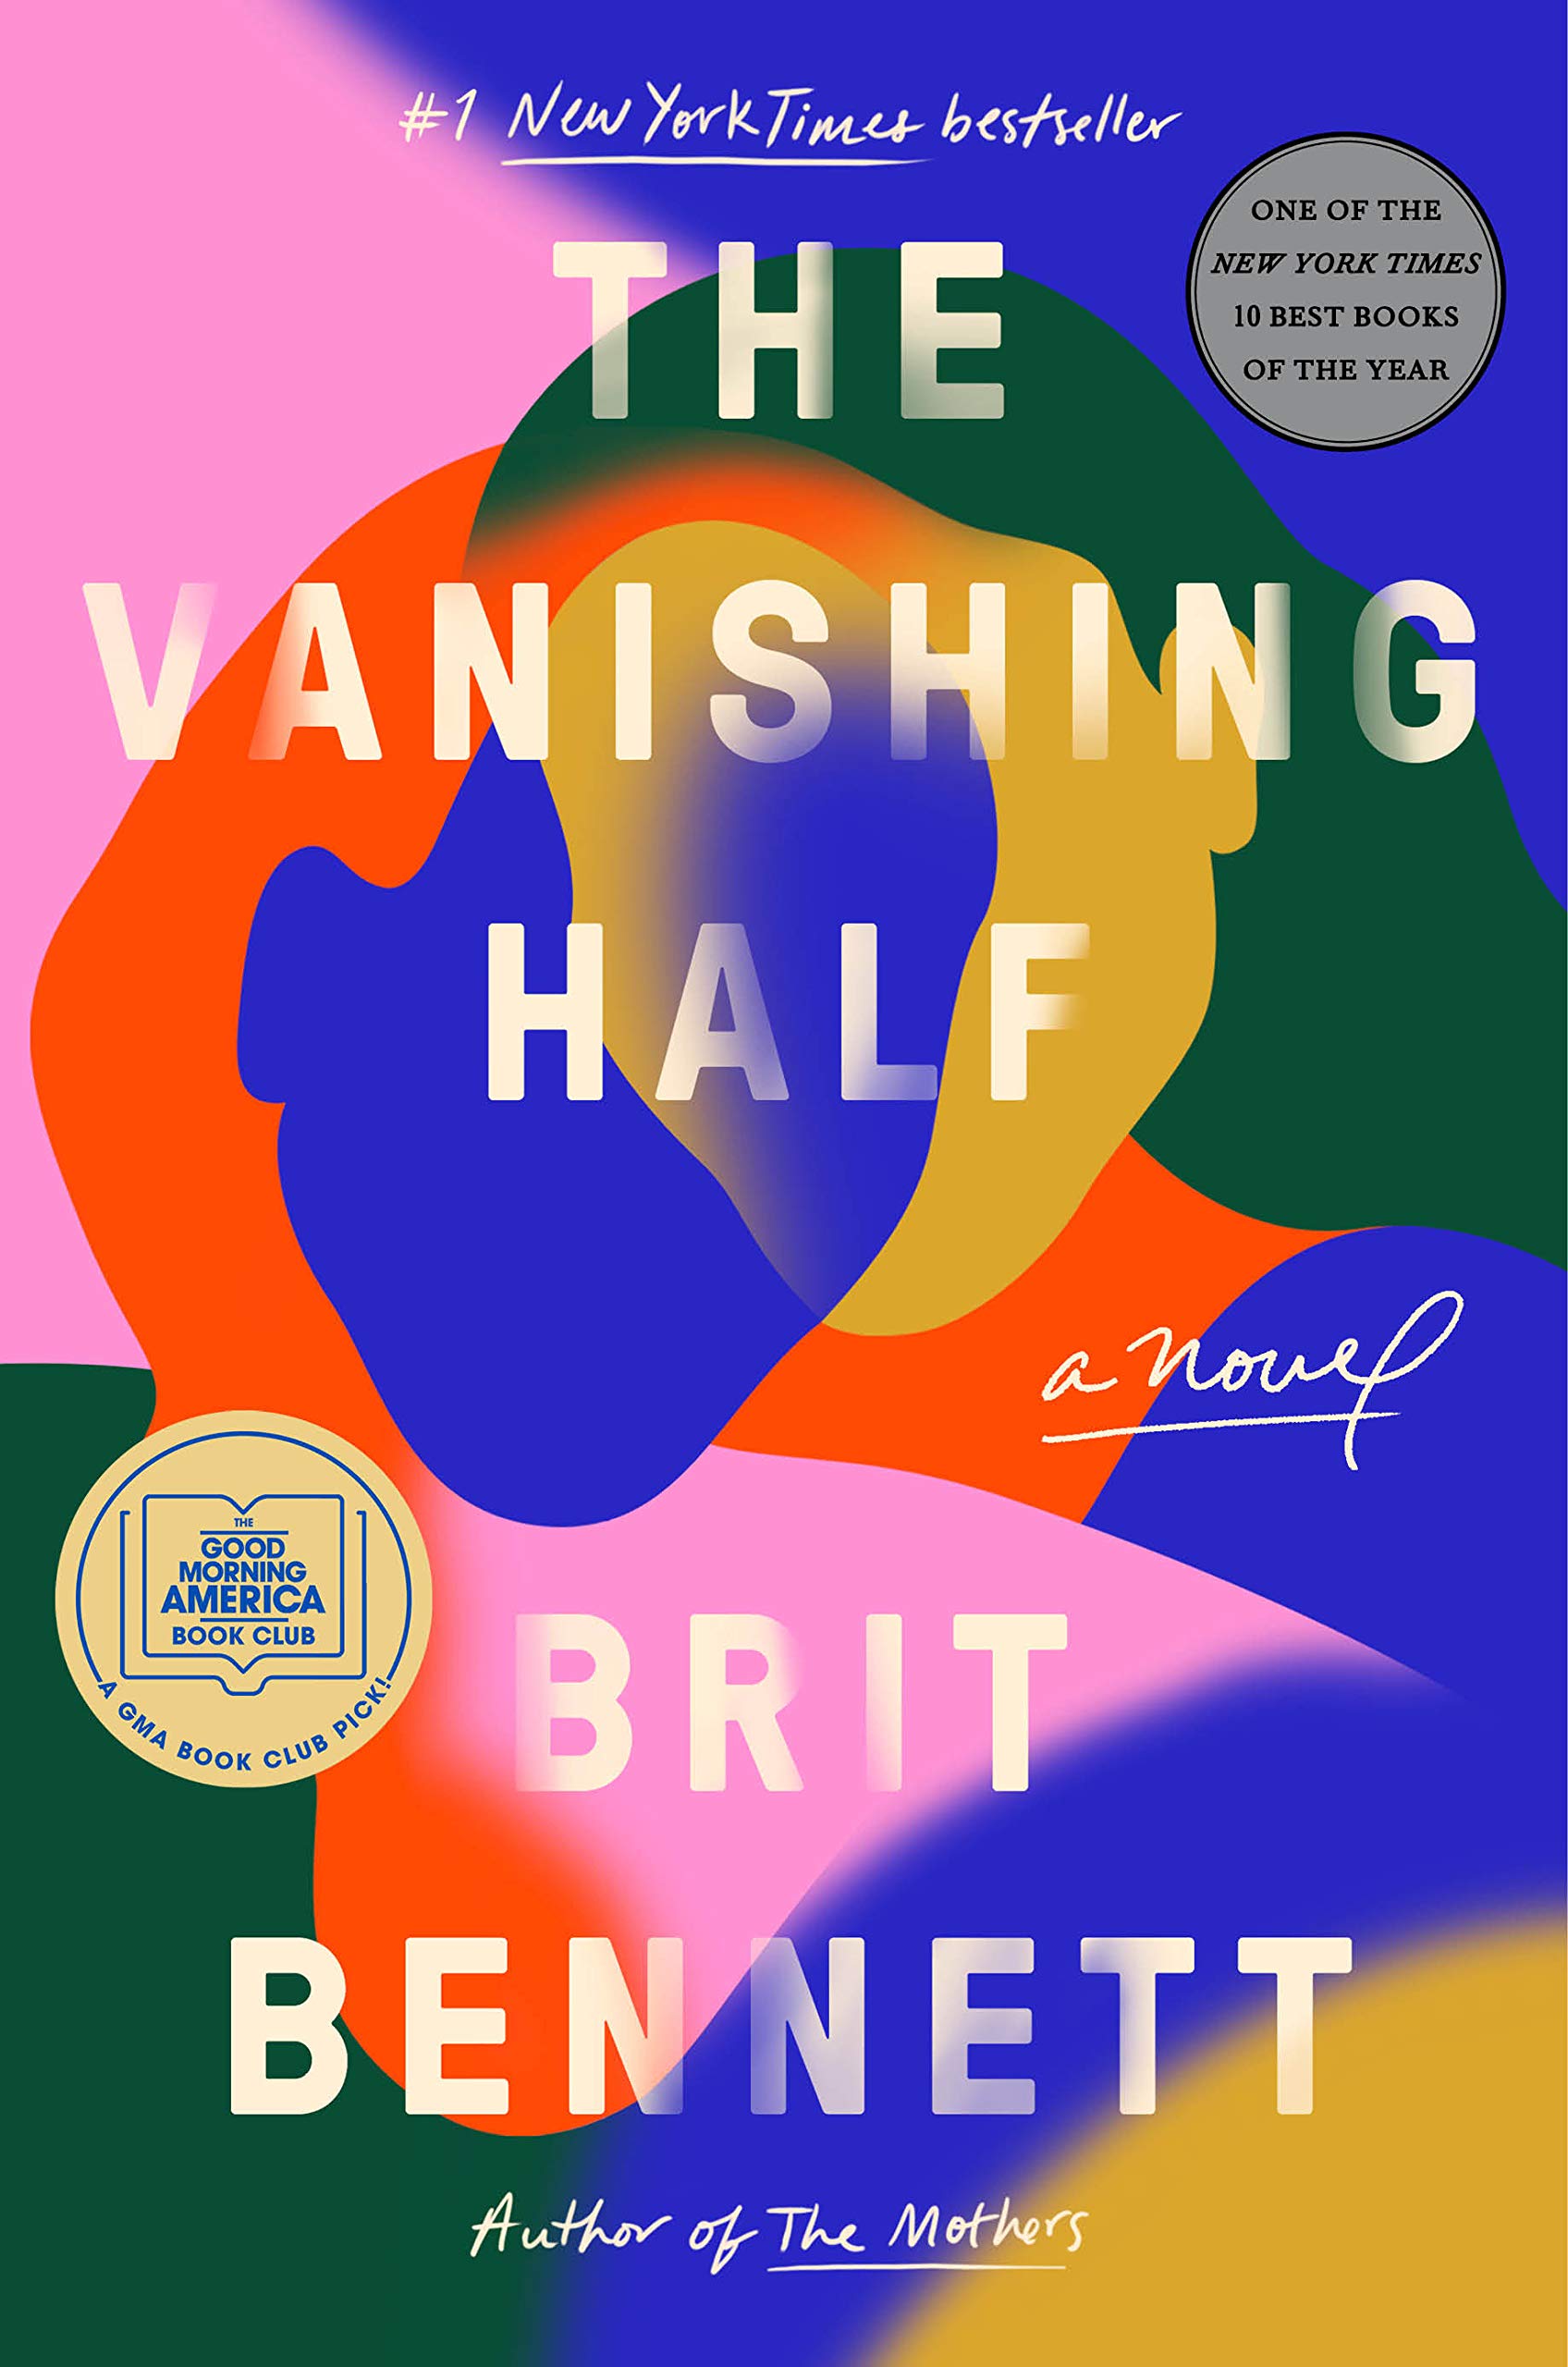 Cover of "The Vanishing Half" by Brit Bennett